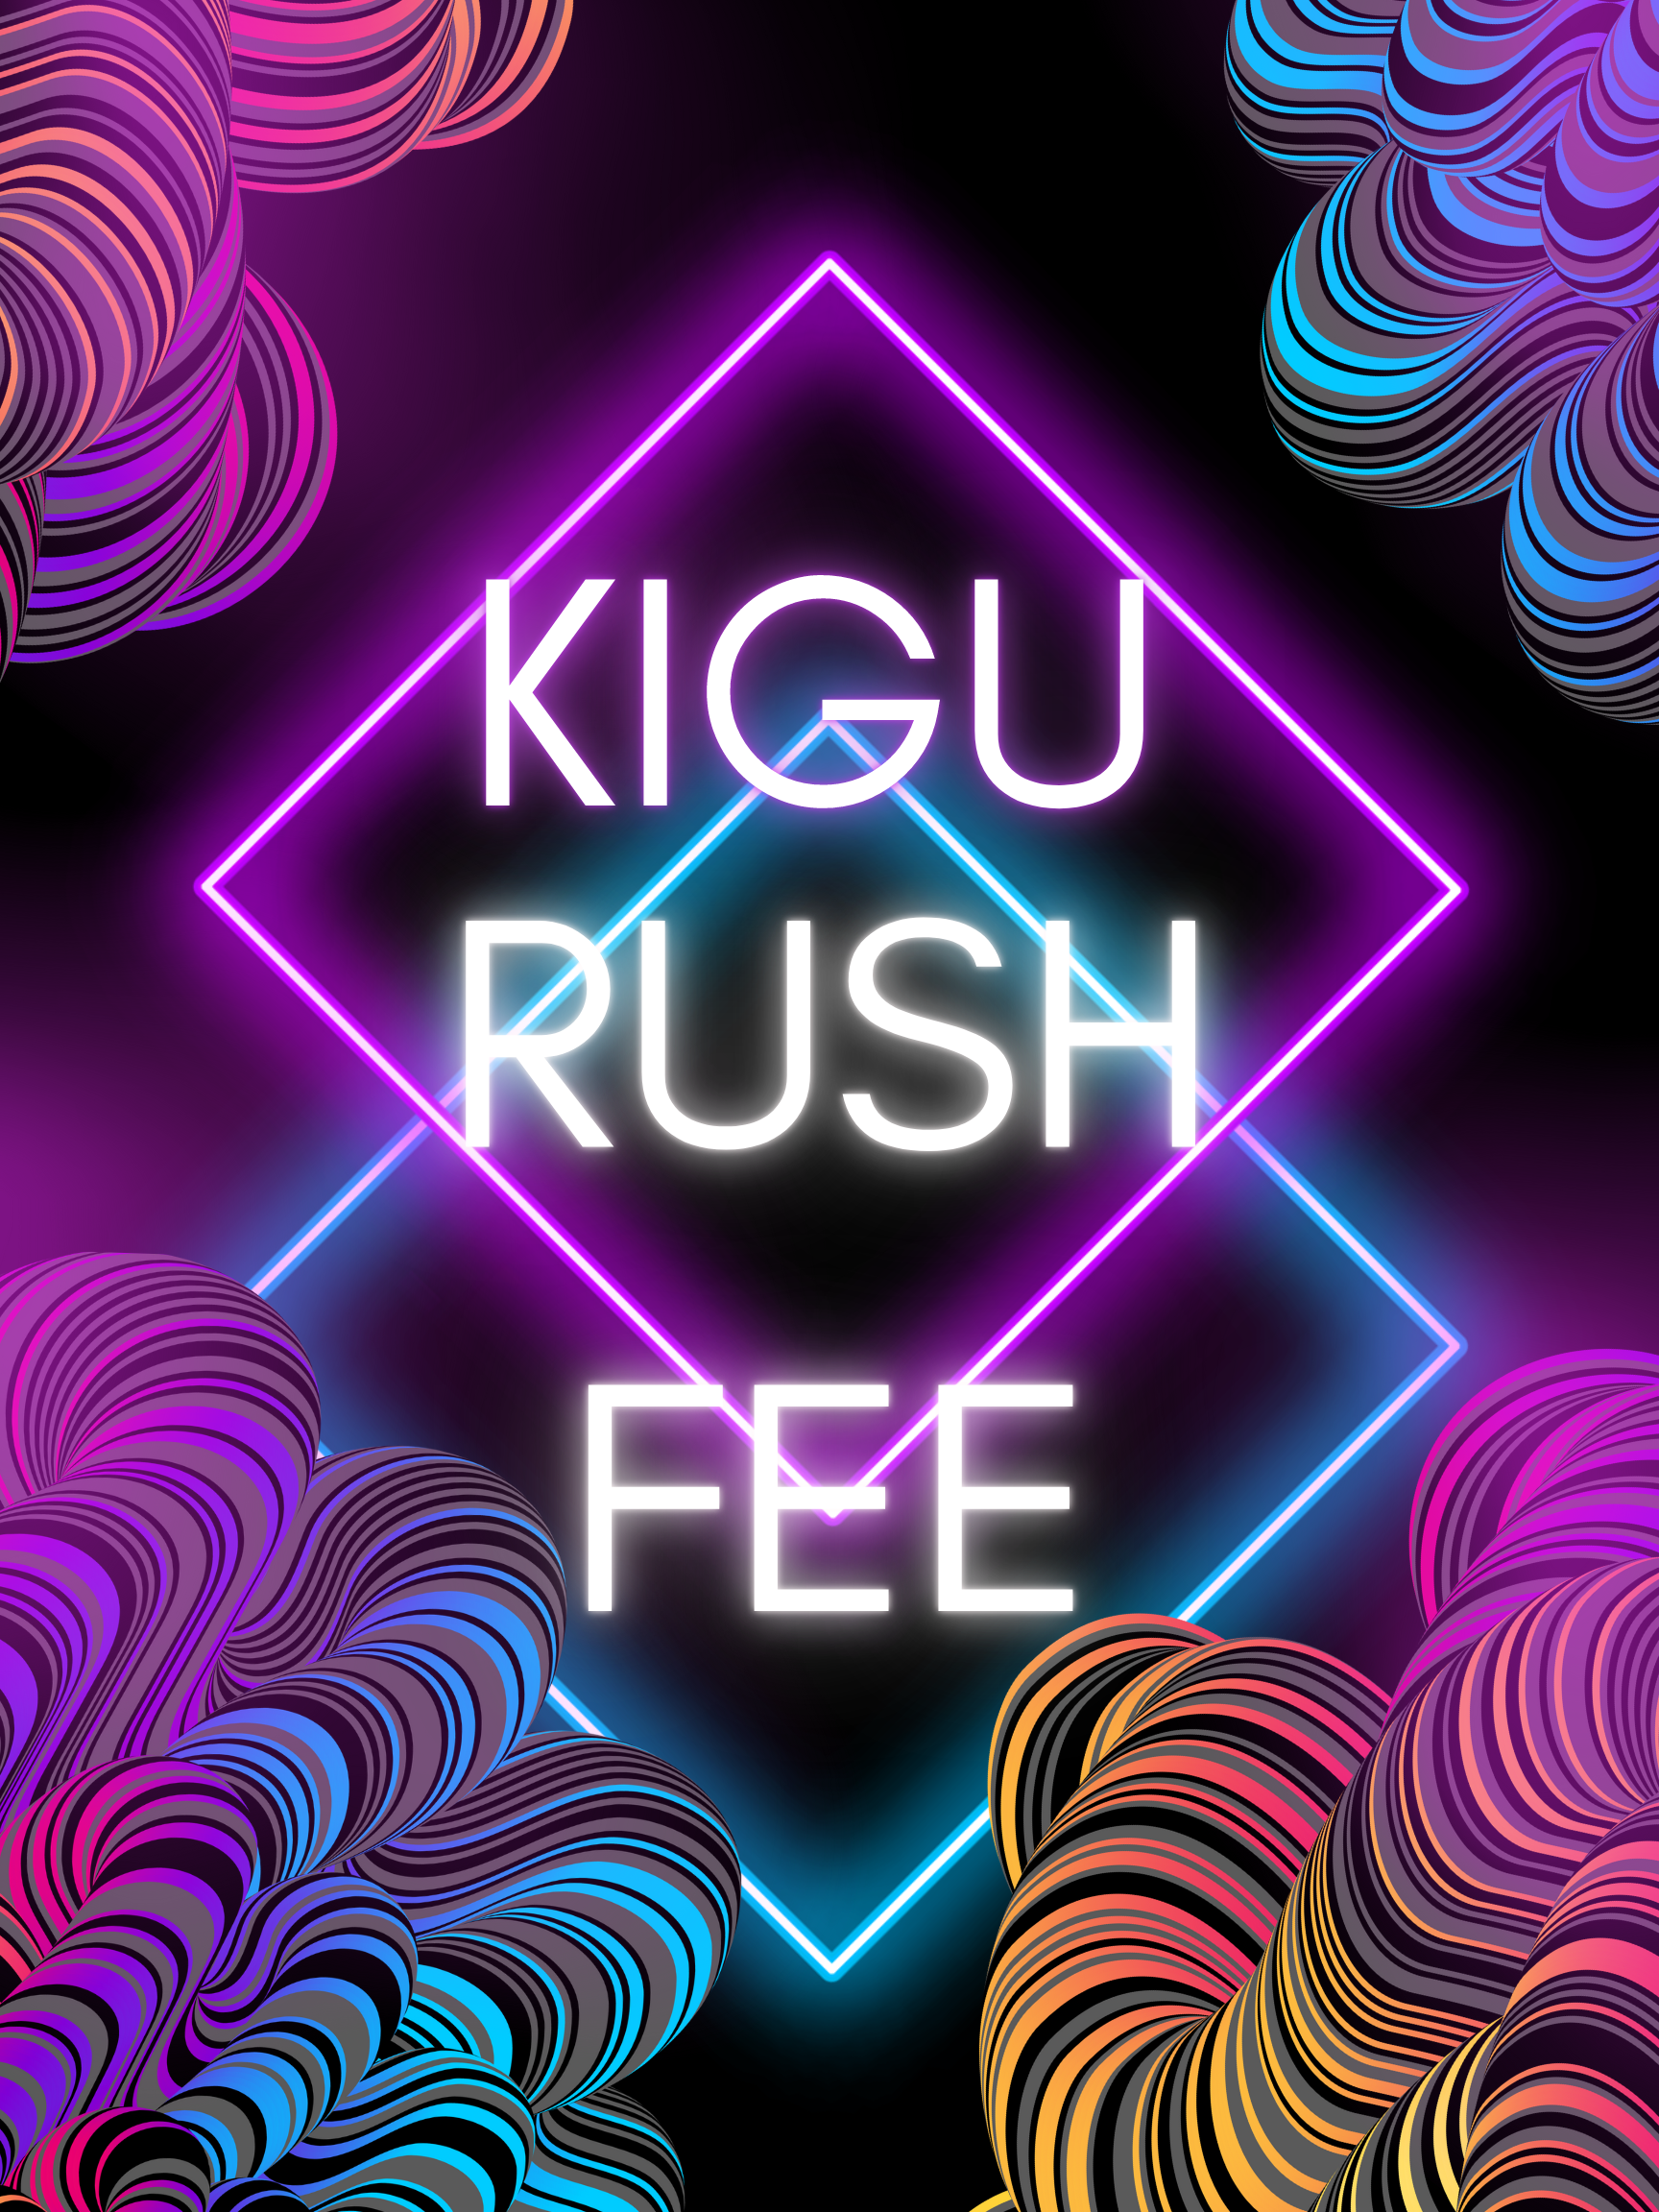 (ADD ON) Kigu Rush Fee